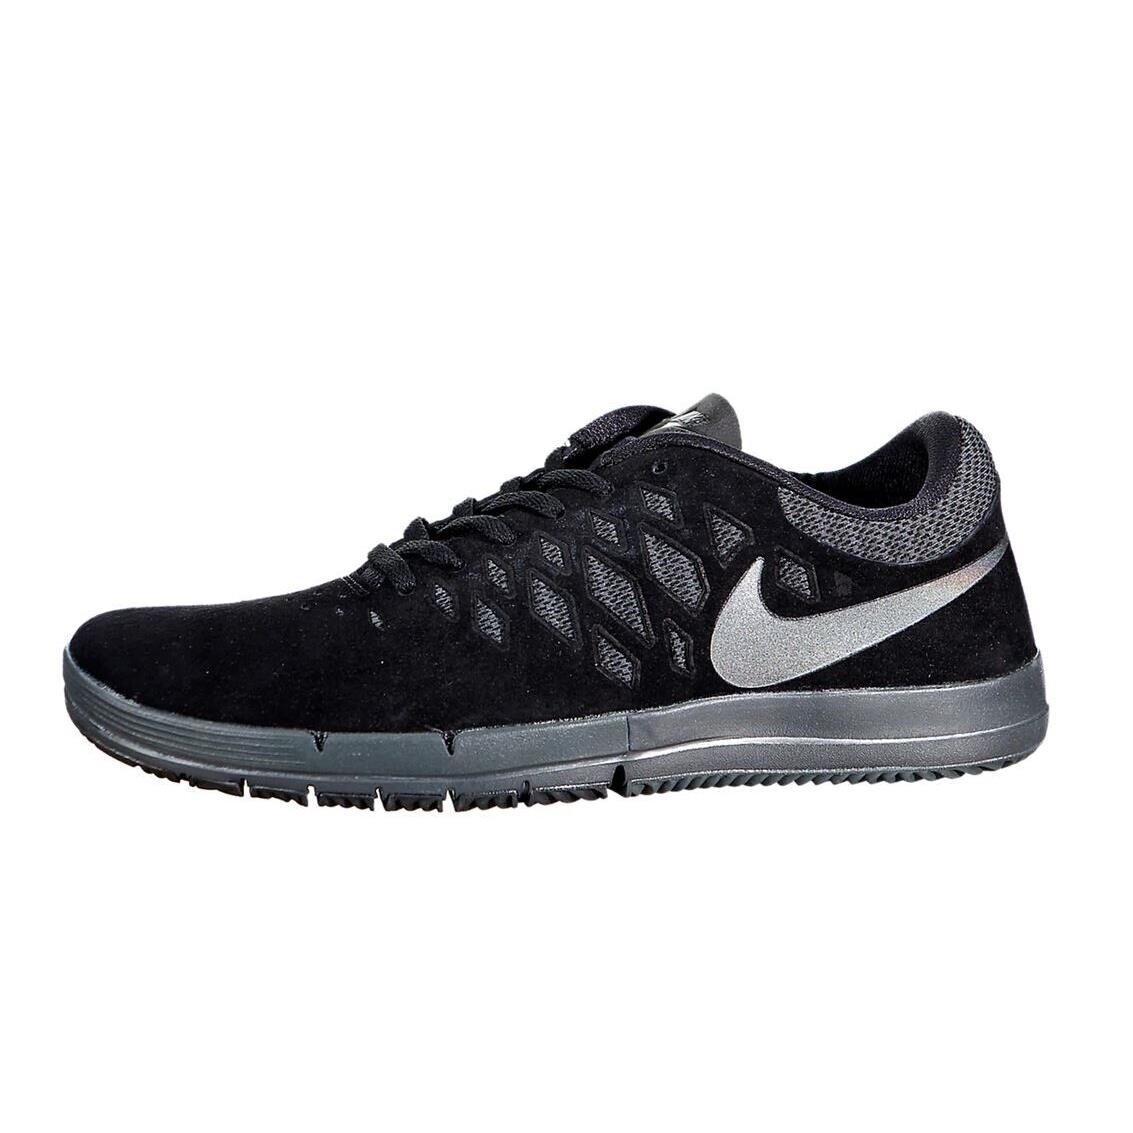 Nike Free SB Premium Black-black Anthracite Sneaker 743184-001 485 Men`s Shoes - Black/Black-Anthracite